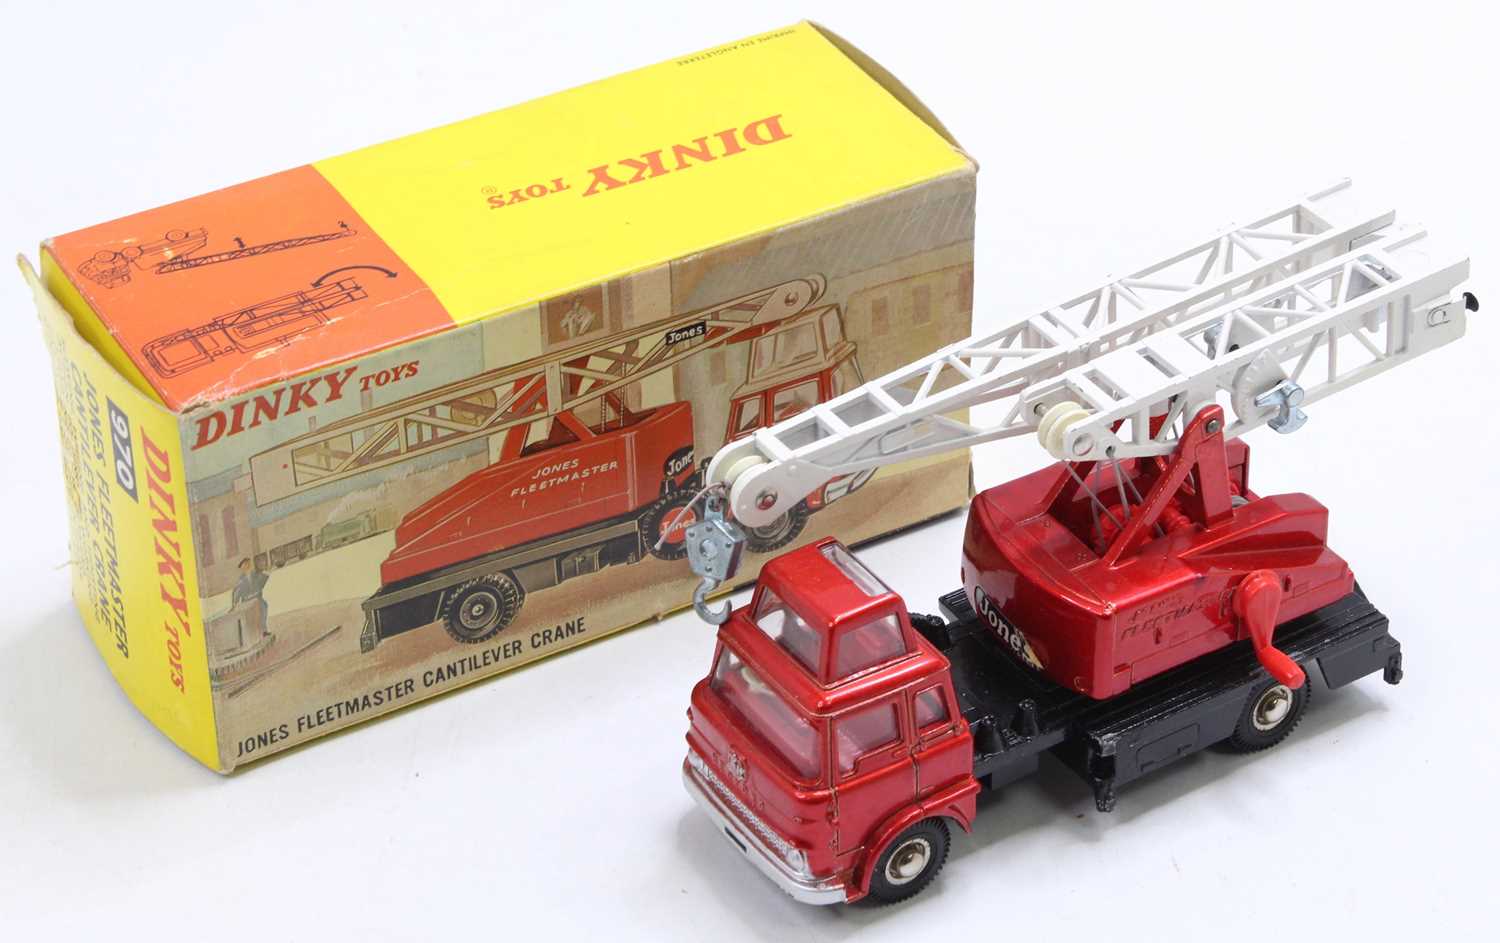 Dinky Toys No. 970 Jones Fleetmaster cantilever crane, comprising metallic red and gloss black